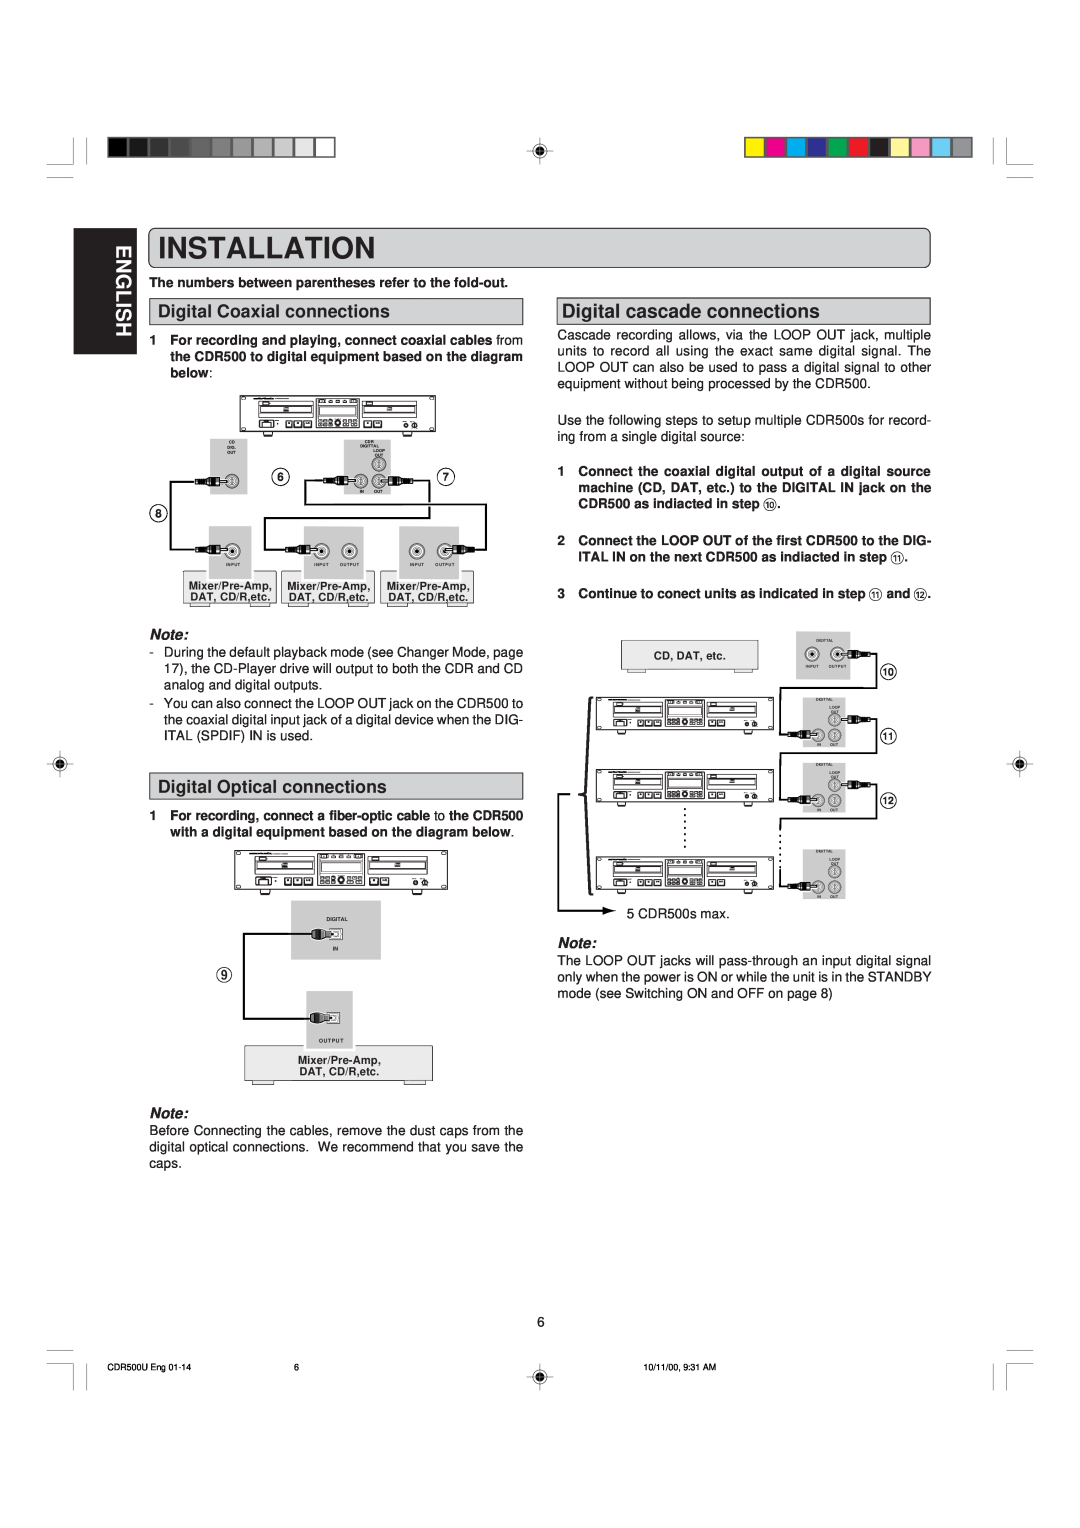 Marantz CDR500 manual Installation, English, Digital cascade connections, Digital Coaxial connections 